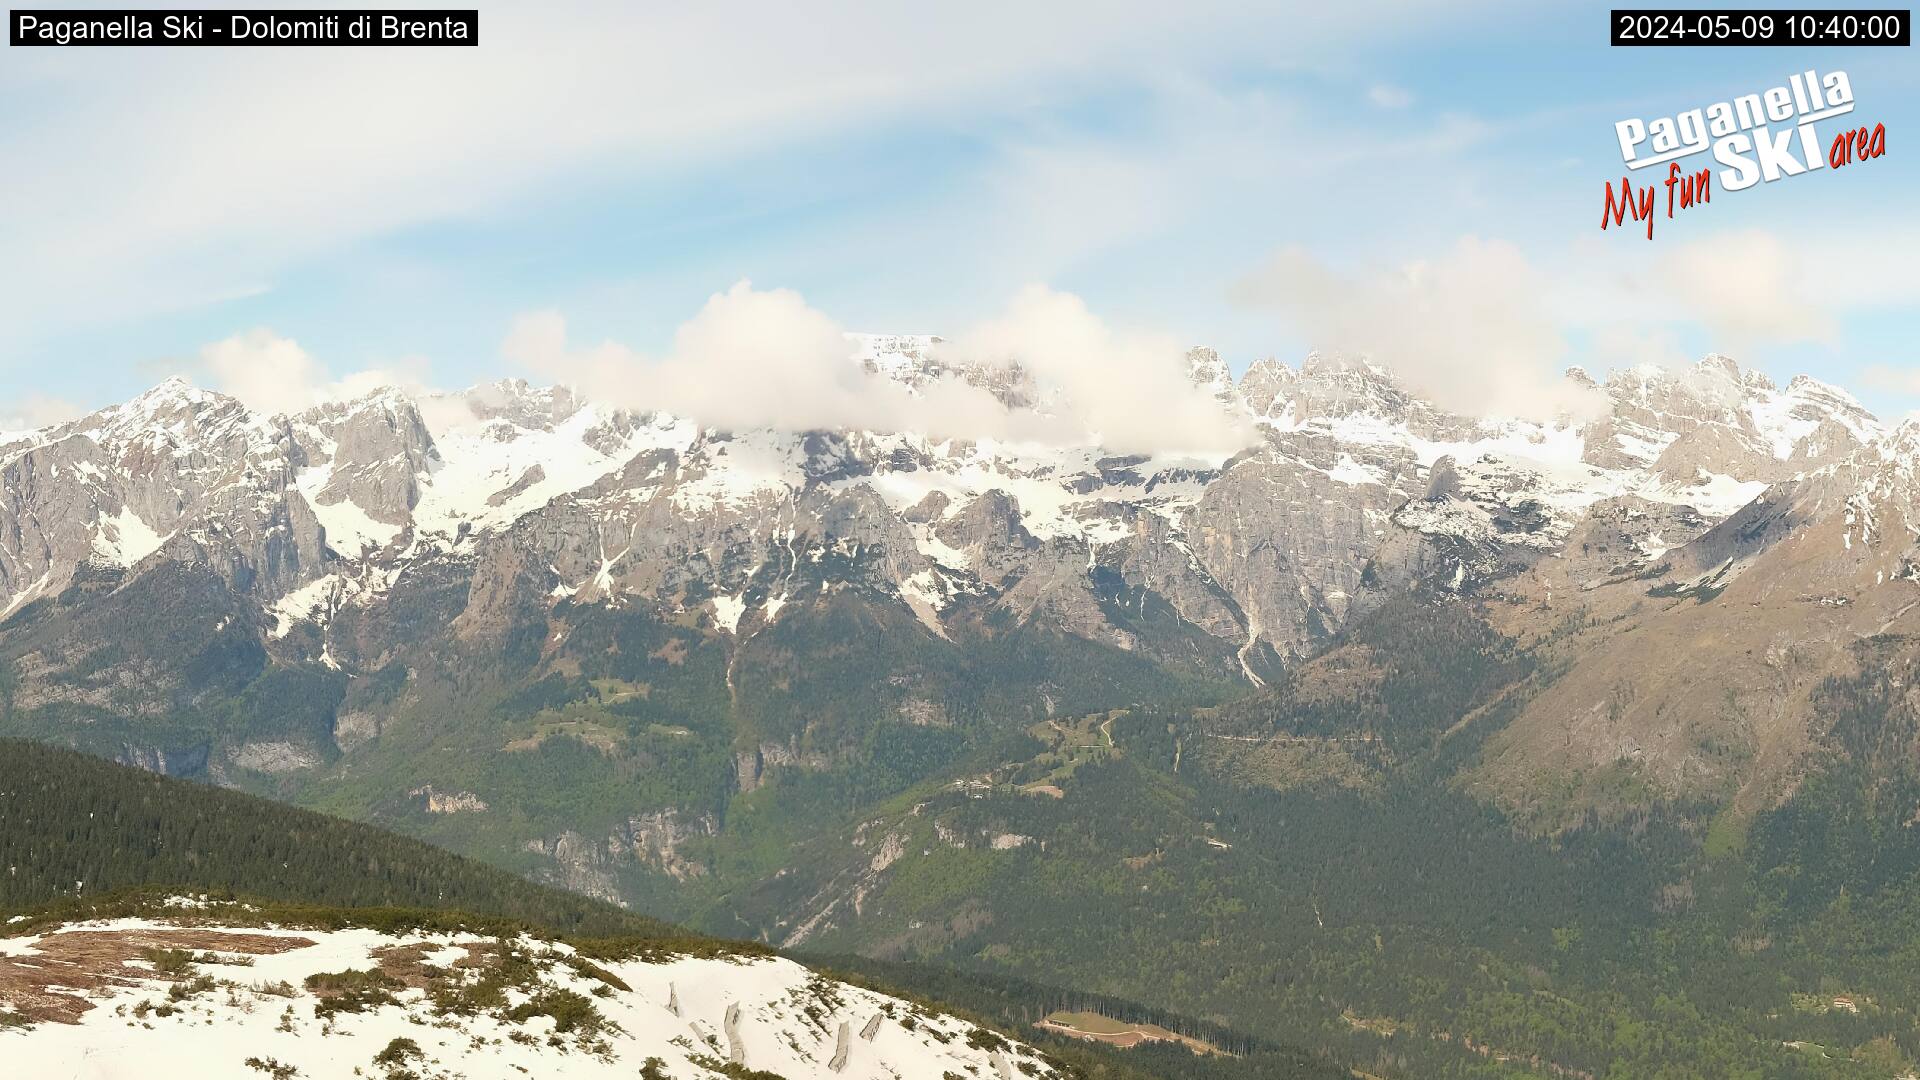 View to the Dolomiti di Brenta